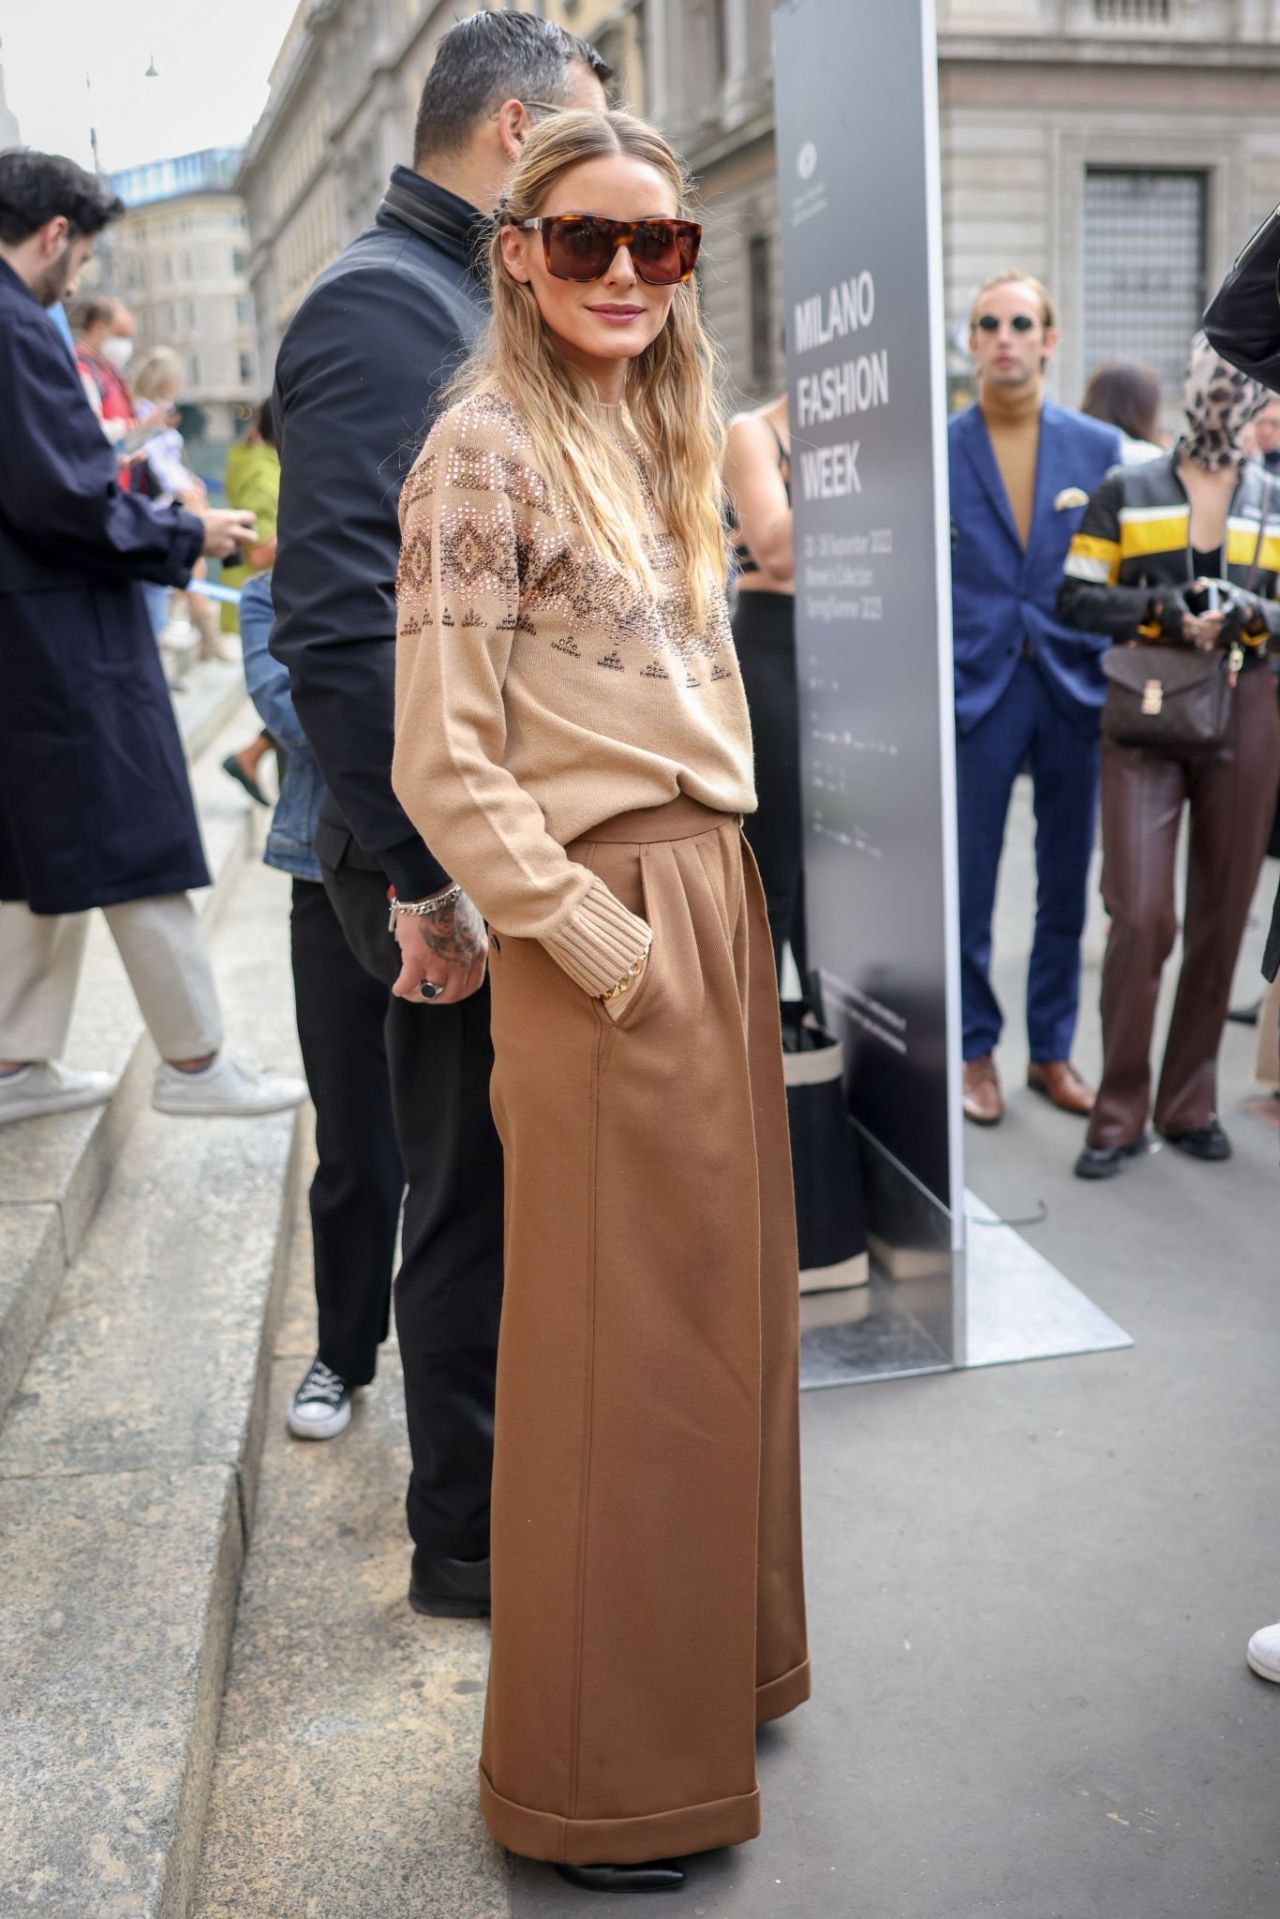 Olivia Palermo is seen wearing plaid pants, beige knit outside